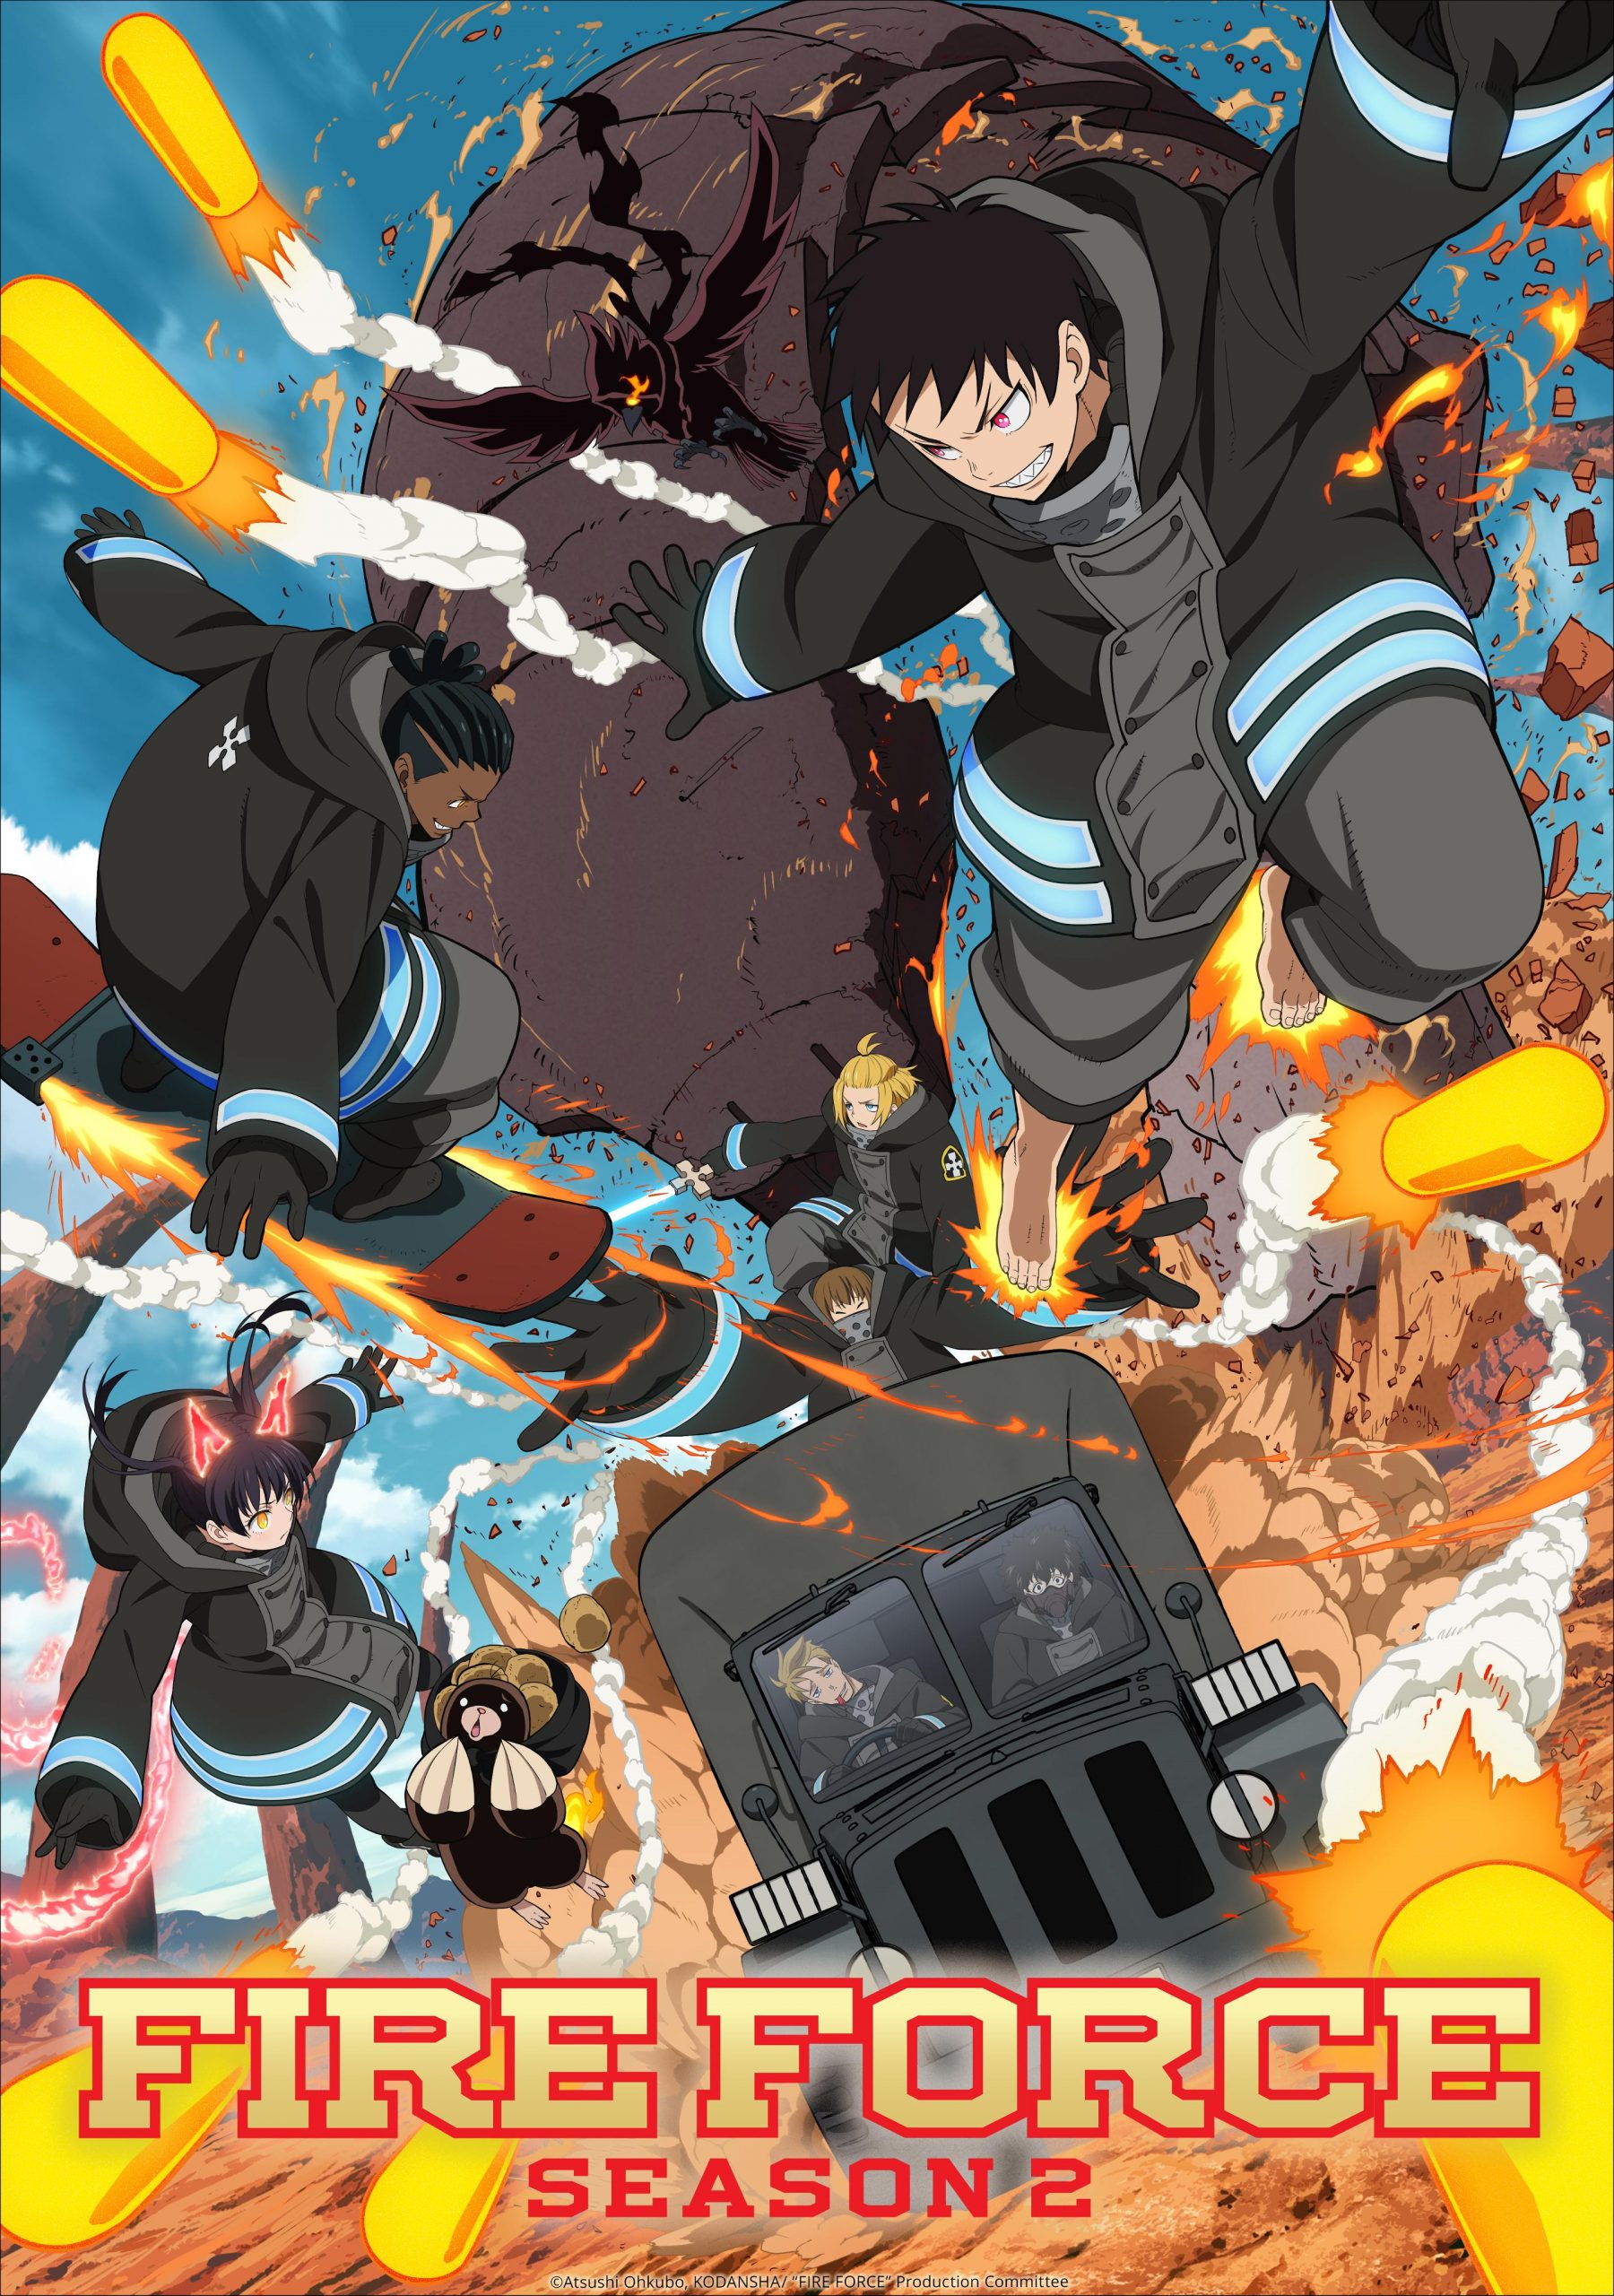 L'anime Fire Force Saison 2, en Visual Art 2 - Adala News